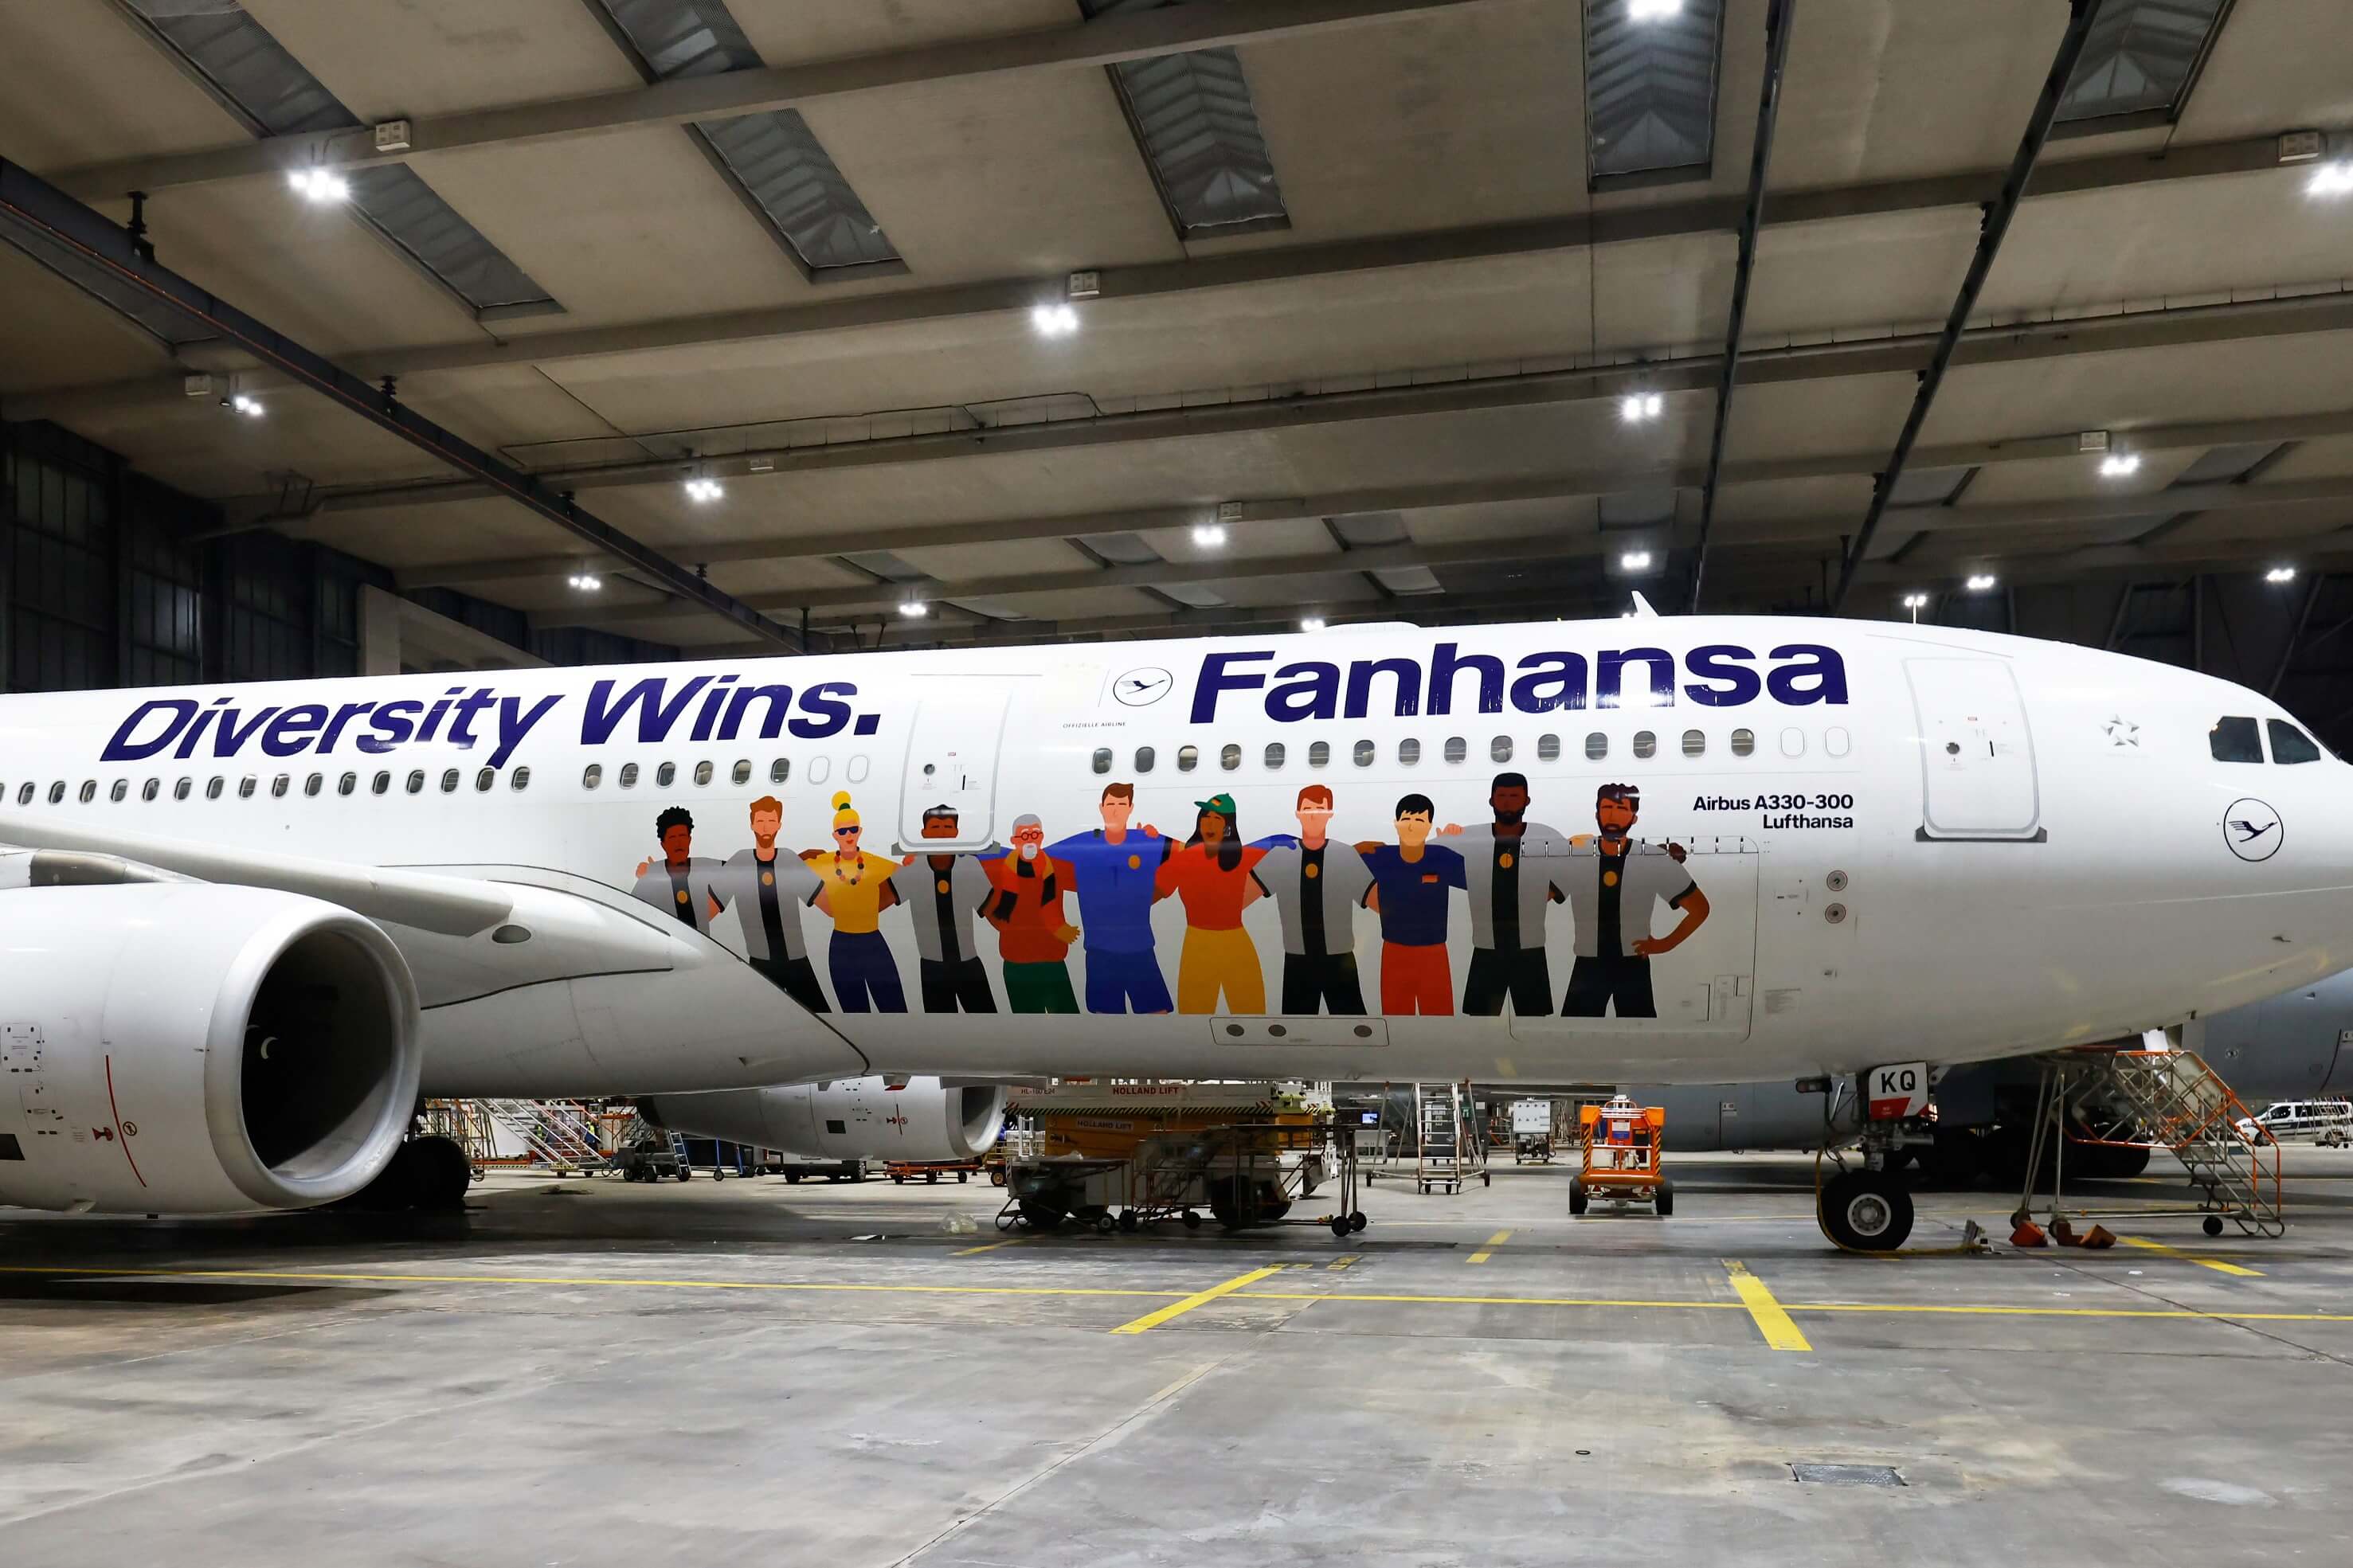 Lufthansa A330 with Fanhansa livery